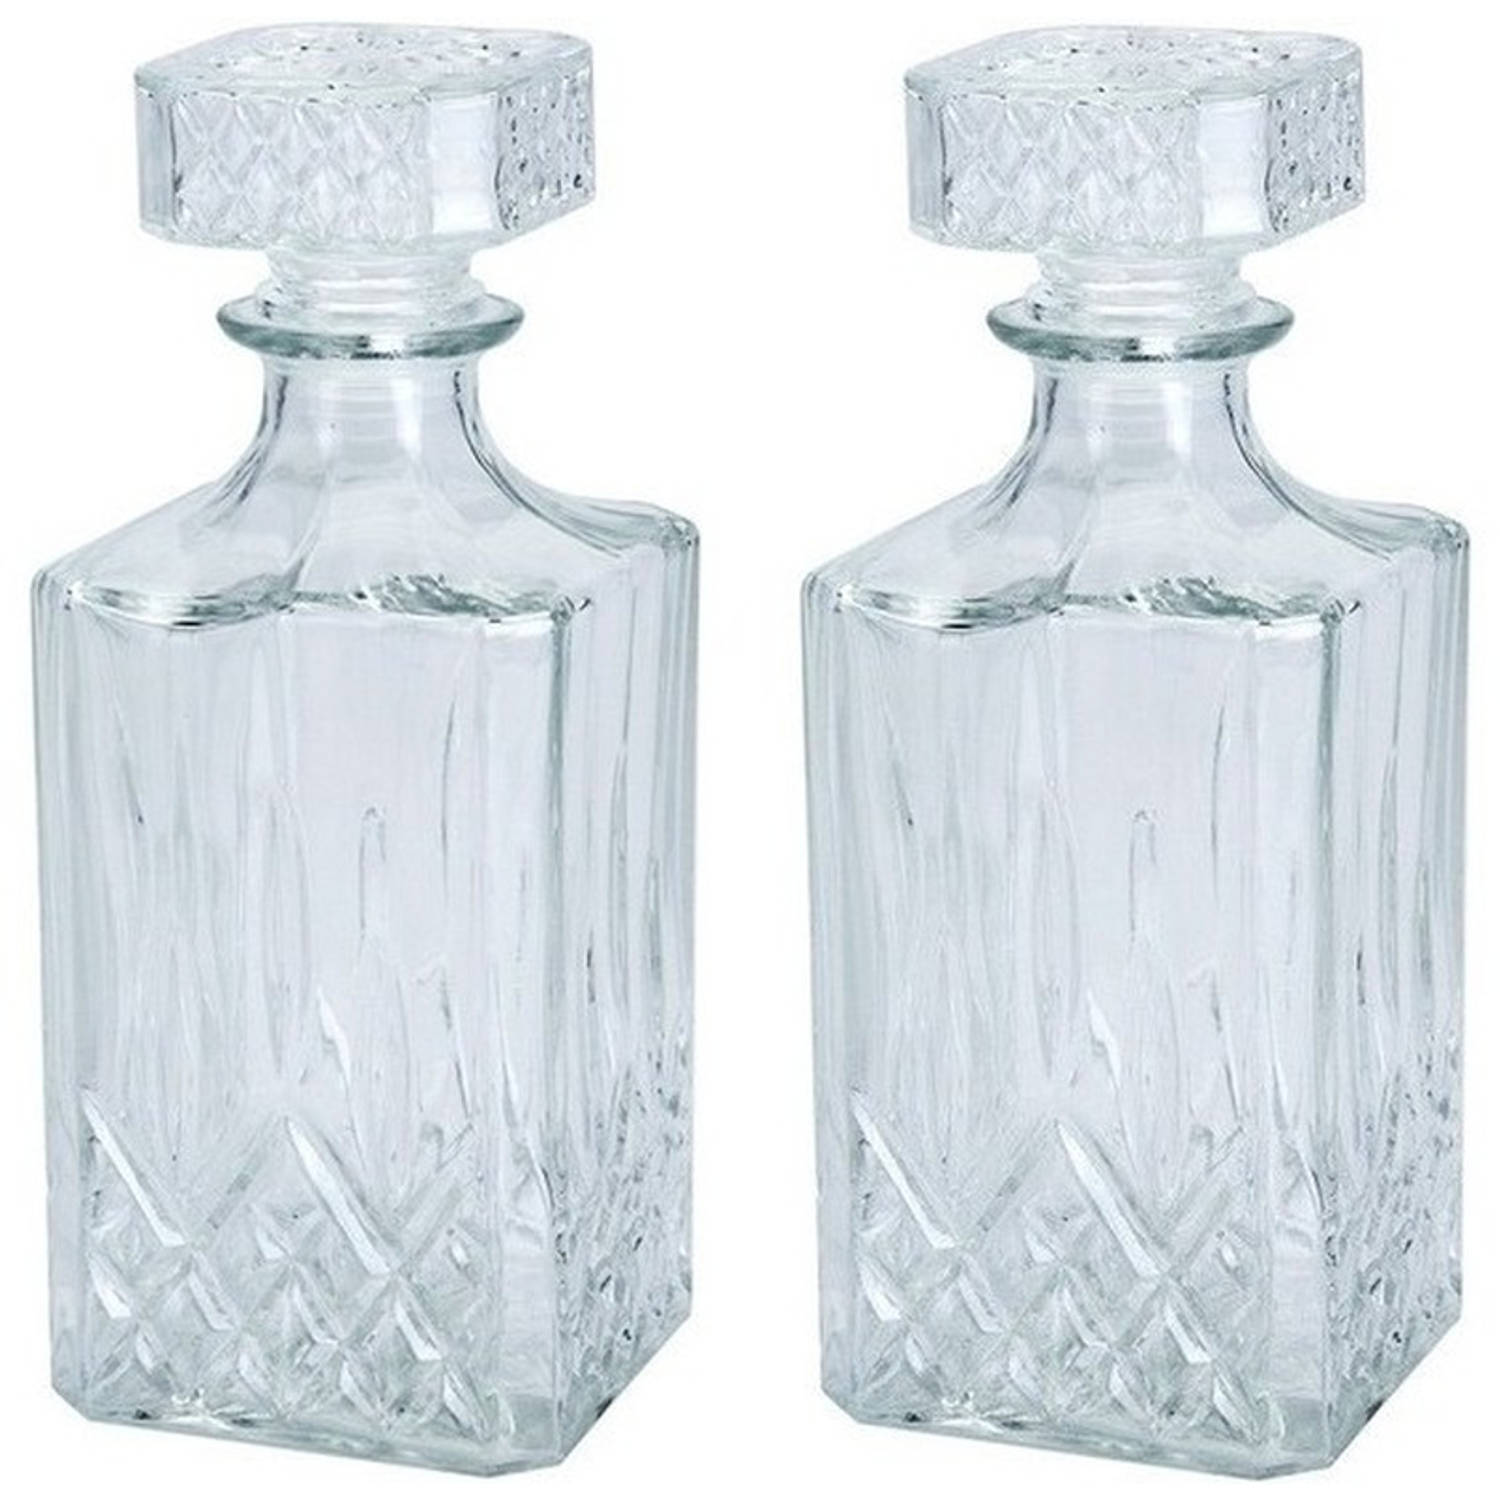 2x Glazen Decoratie Fles-karaf 750 Ml-9 X 23 Cm Voor Water Of Likeuren Whiskeykaraffen